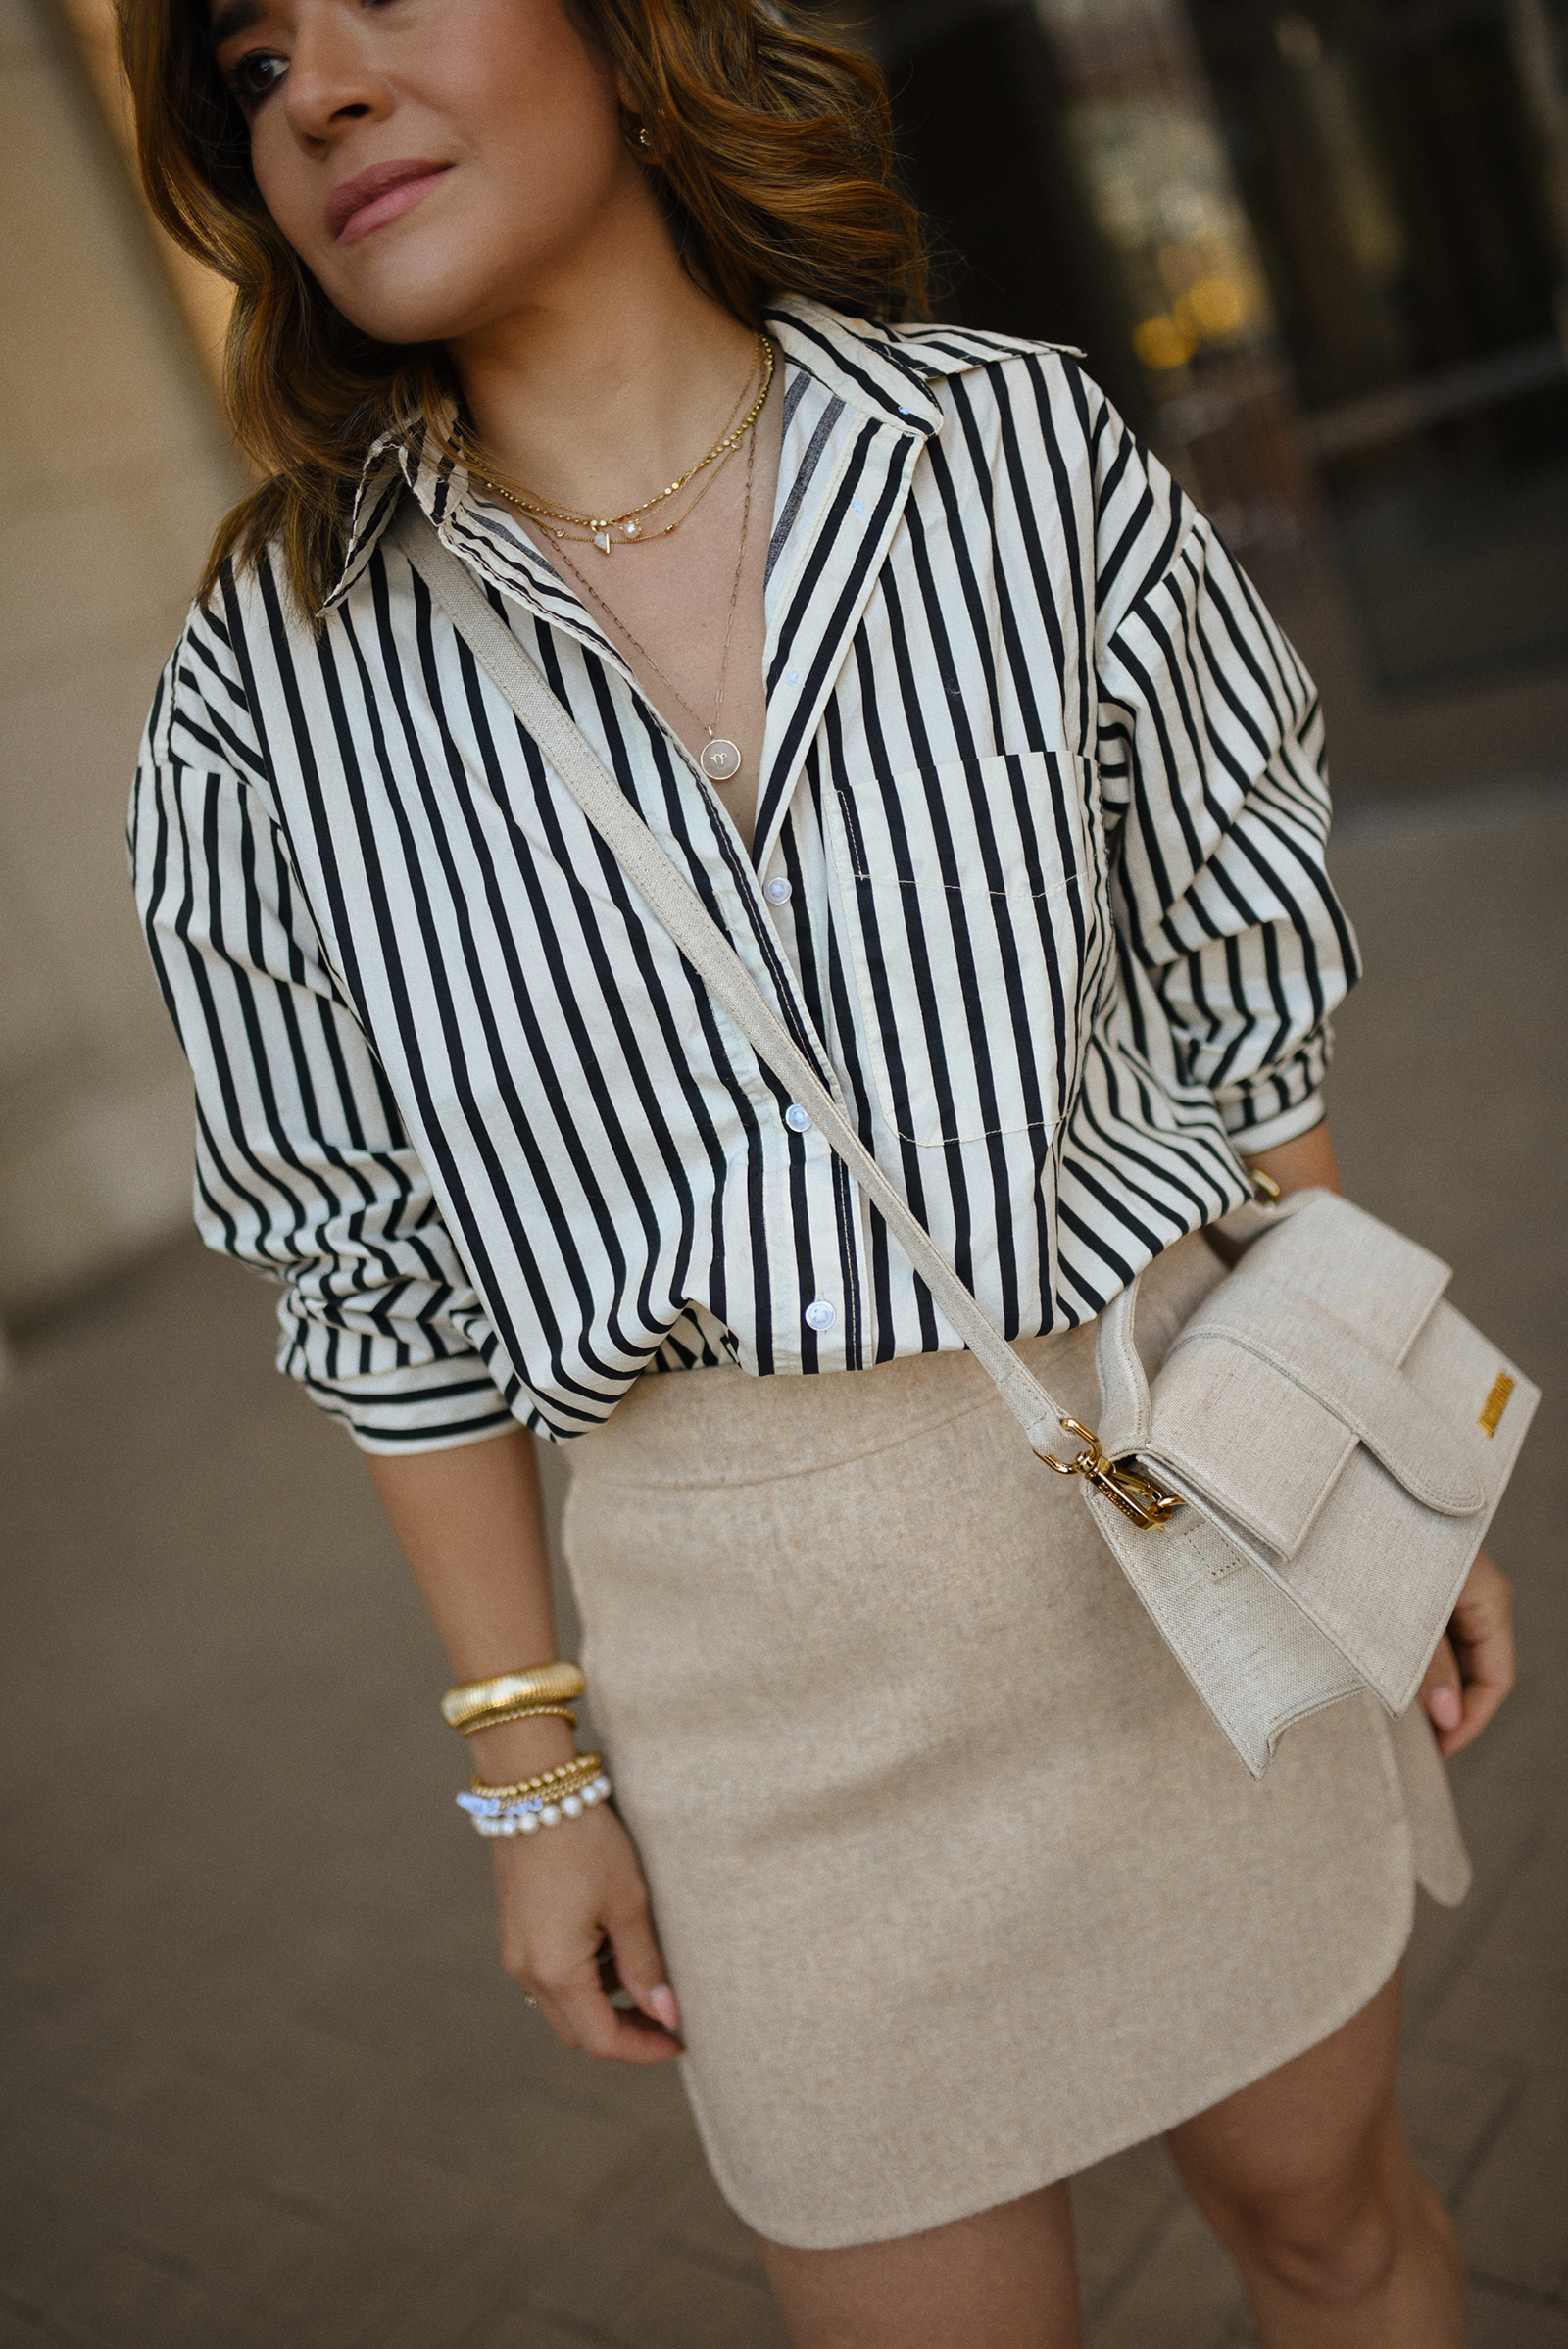 Carolina Hellal of Chic Talk wearing a Sezane mini skirt, H&M striped shirt and Jacquemus bag